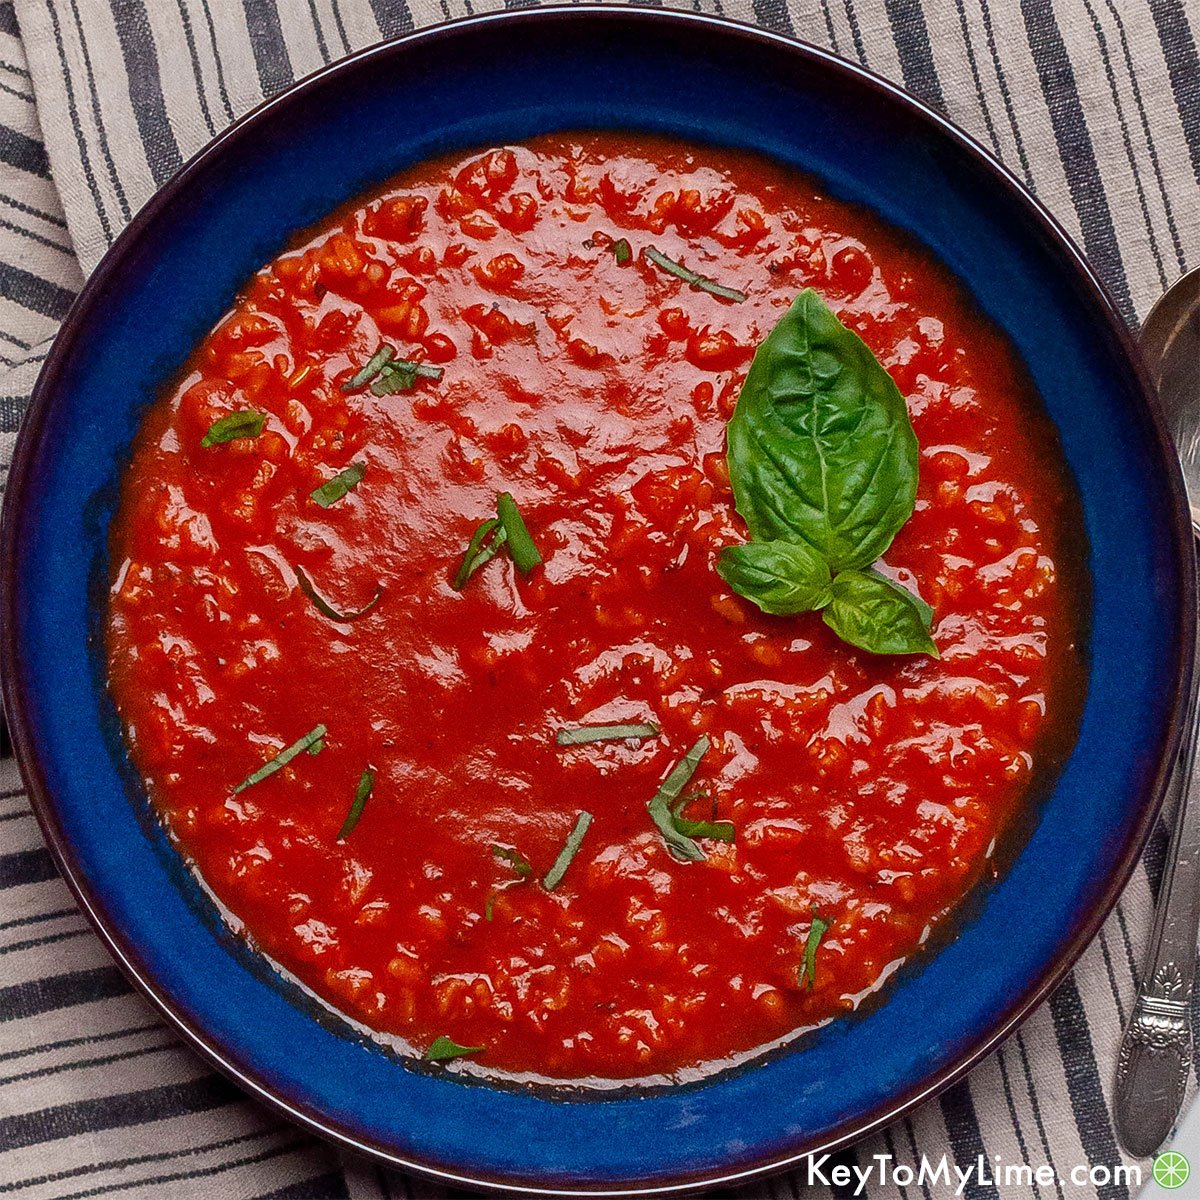 The best tomato rice soup recipe.